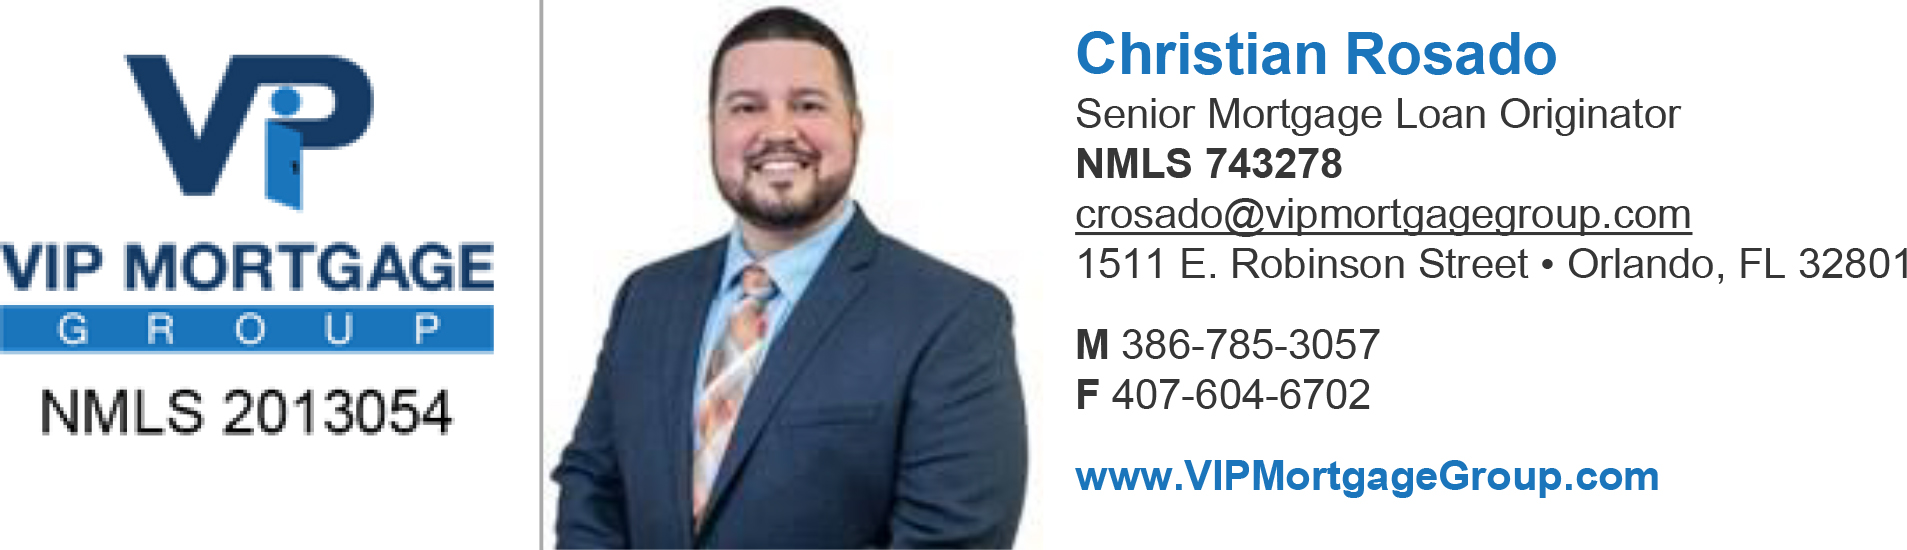 Christian Rosado, Senior Mortgage Loan Originator information